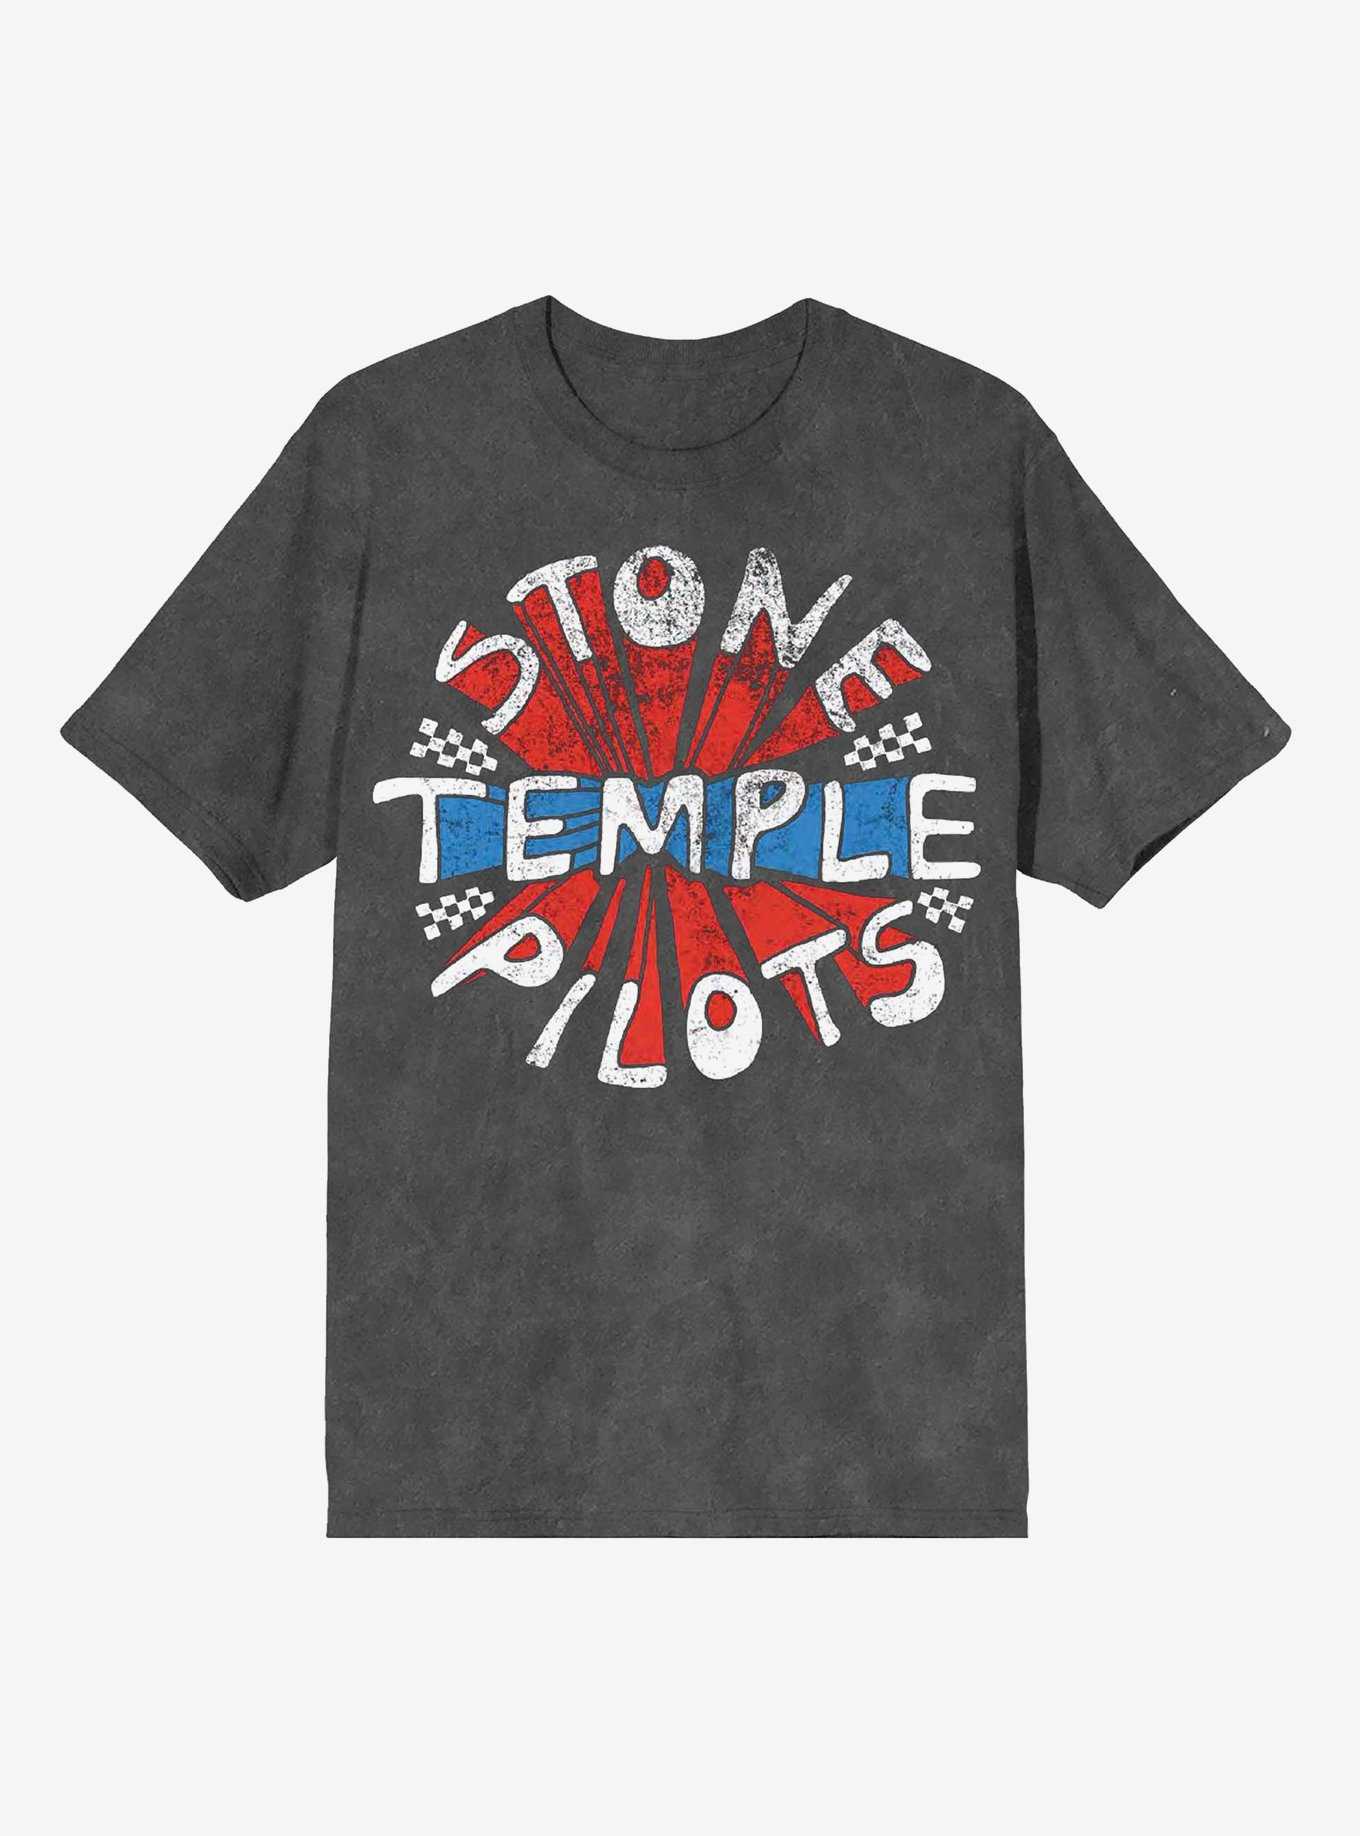 Alternative Rock T-Shirts, Apparel & Merchandise